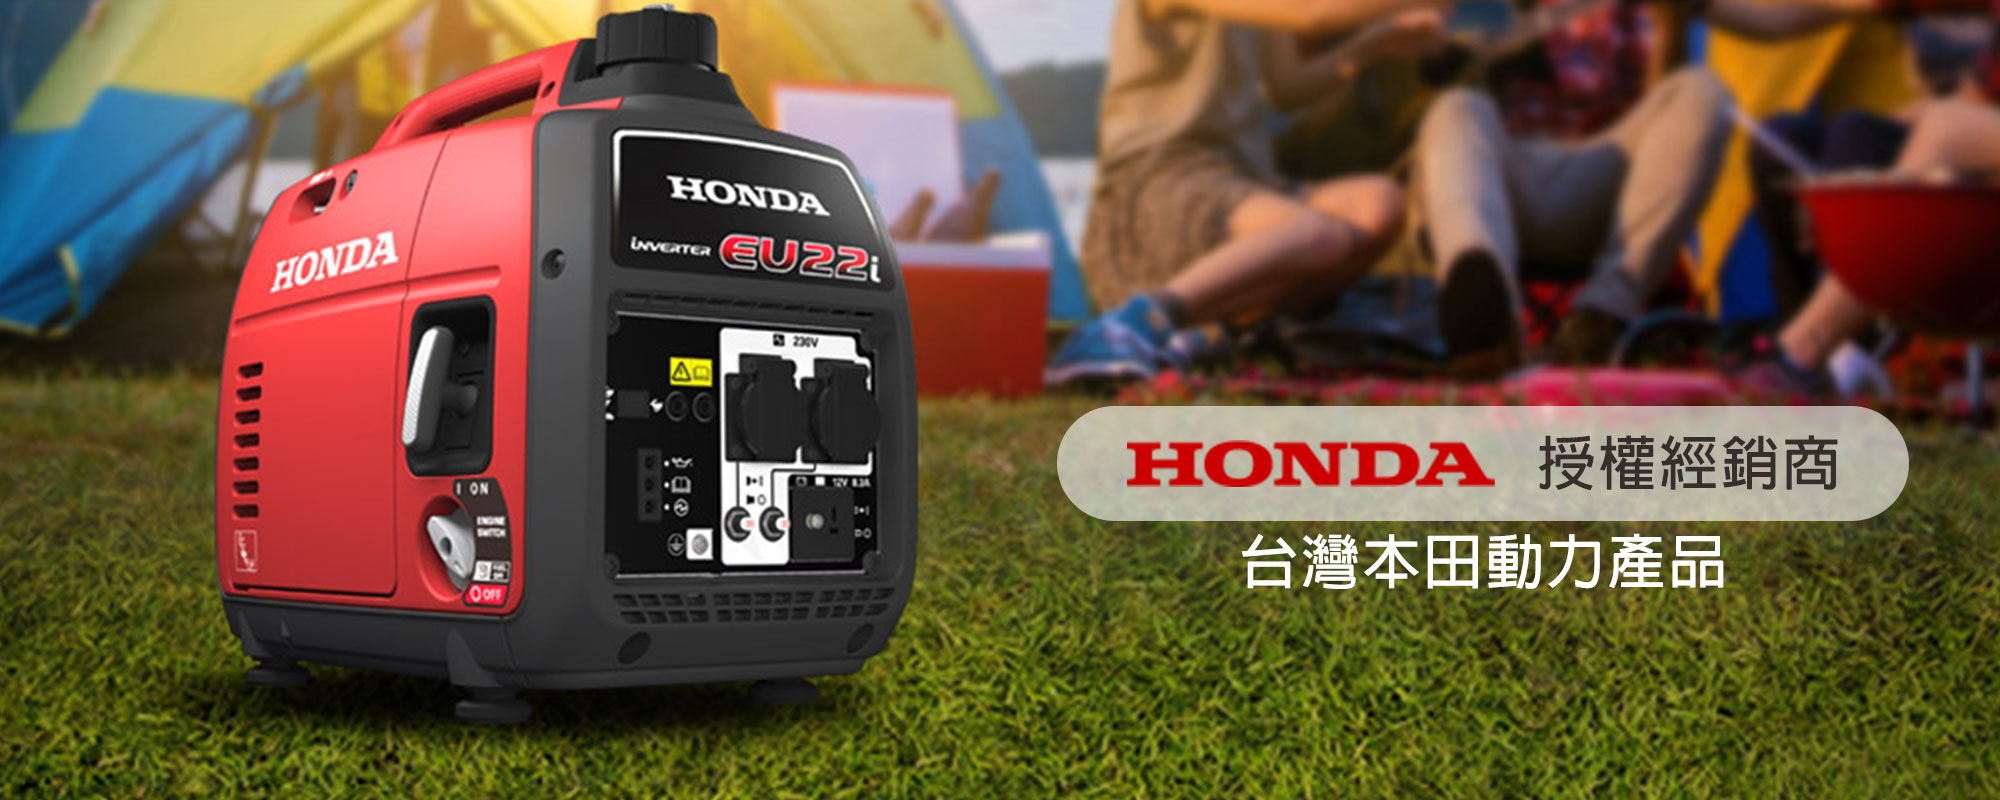 Honda 台灣本田動力產品